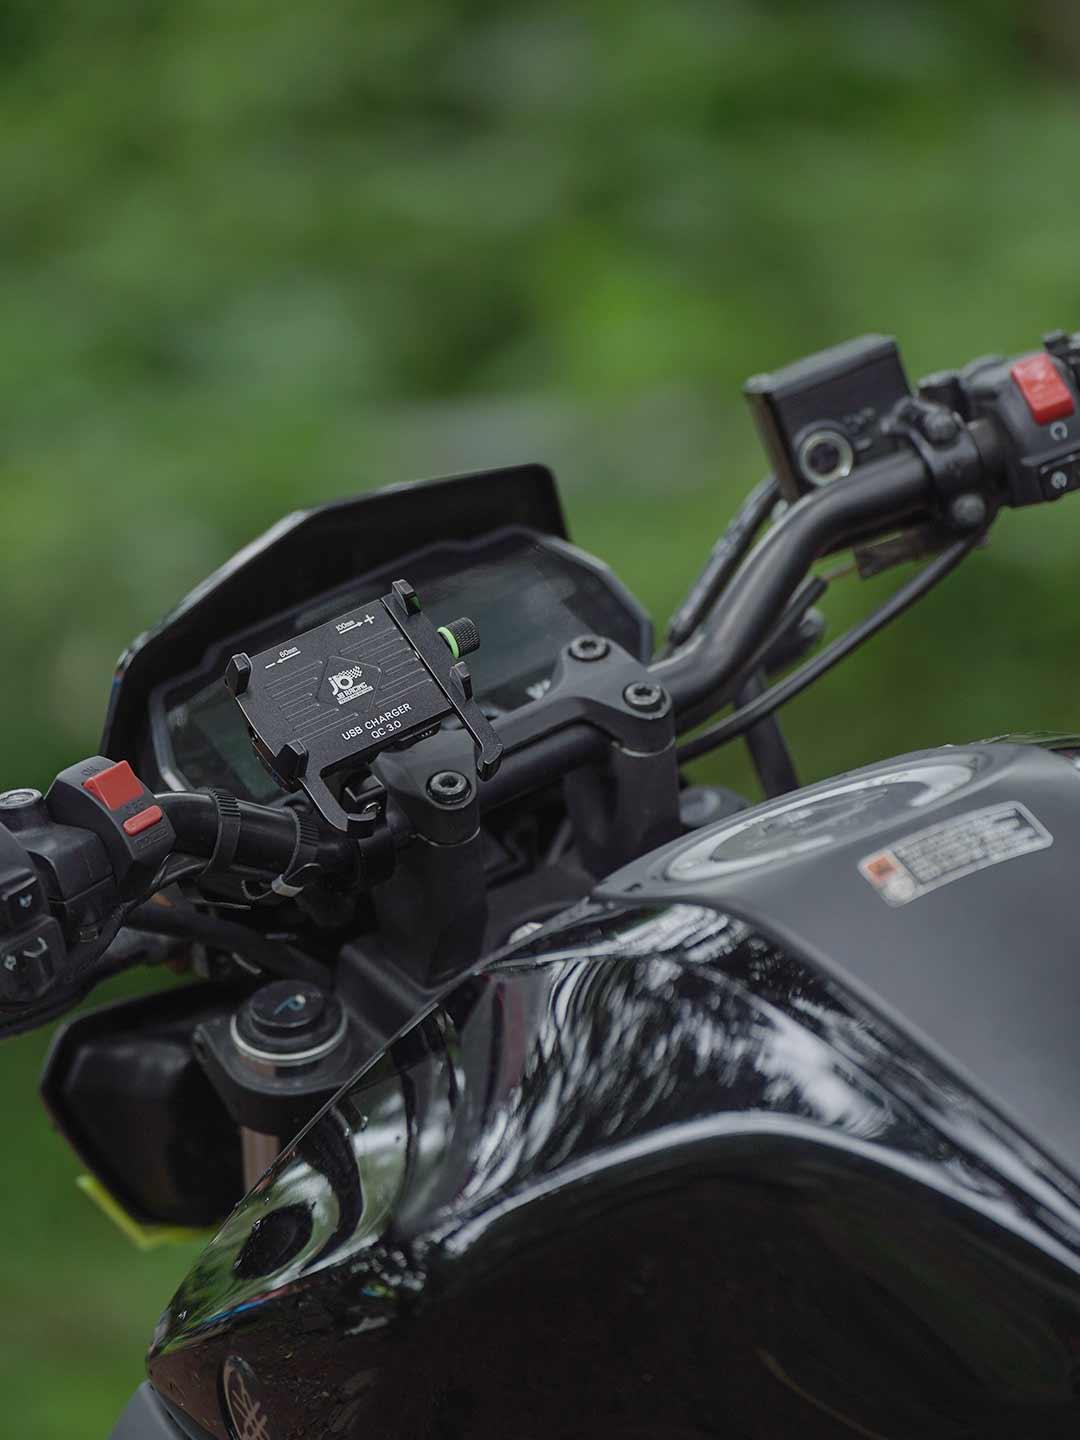 JB Racing M6 S Mobile Holder With USB Charger - Moto Modz